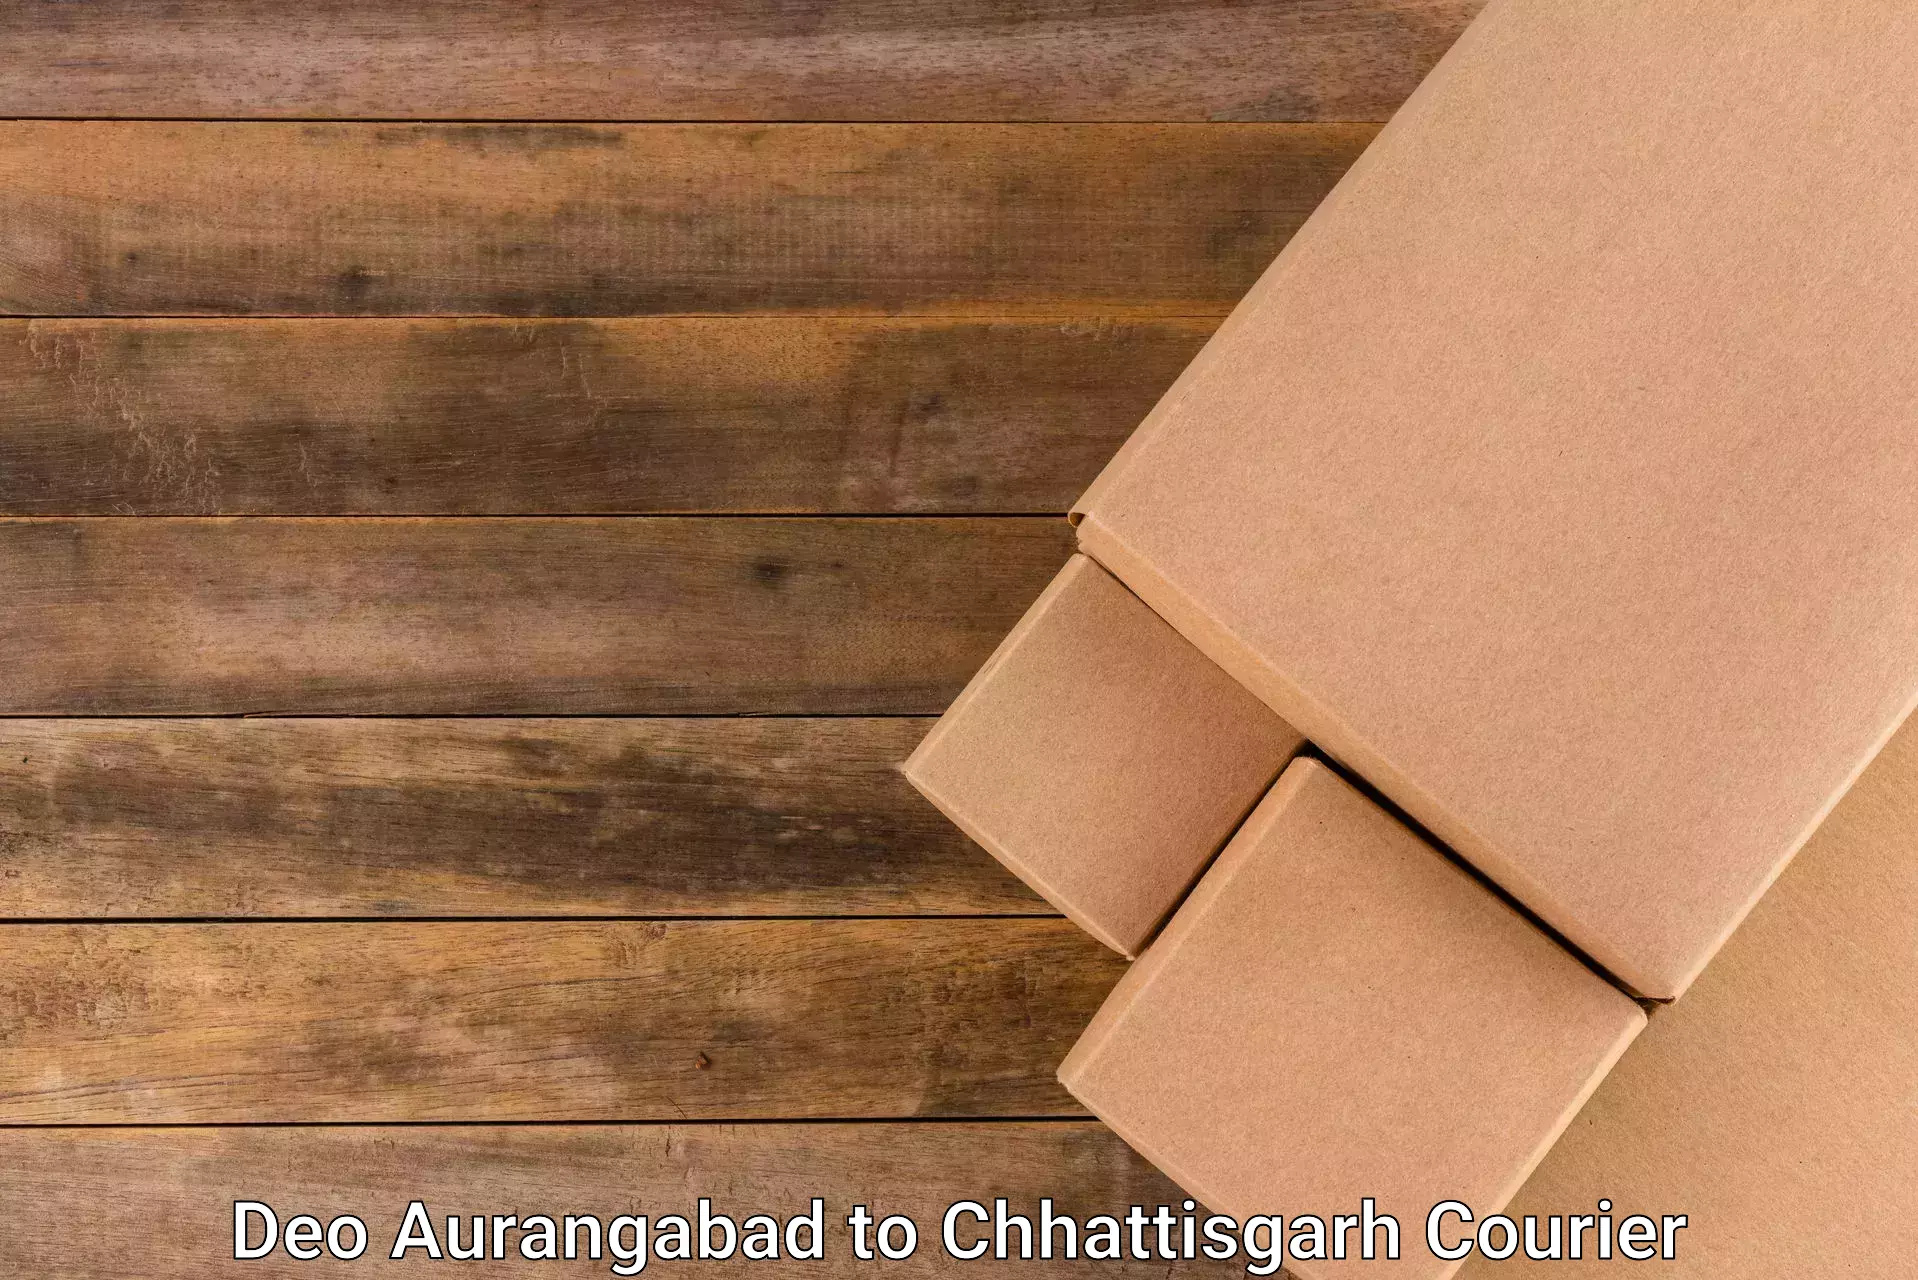 High-capacity parcel service Deo Aurangabad to Kanker